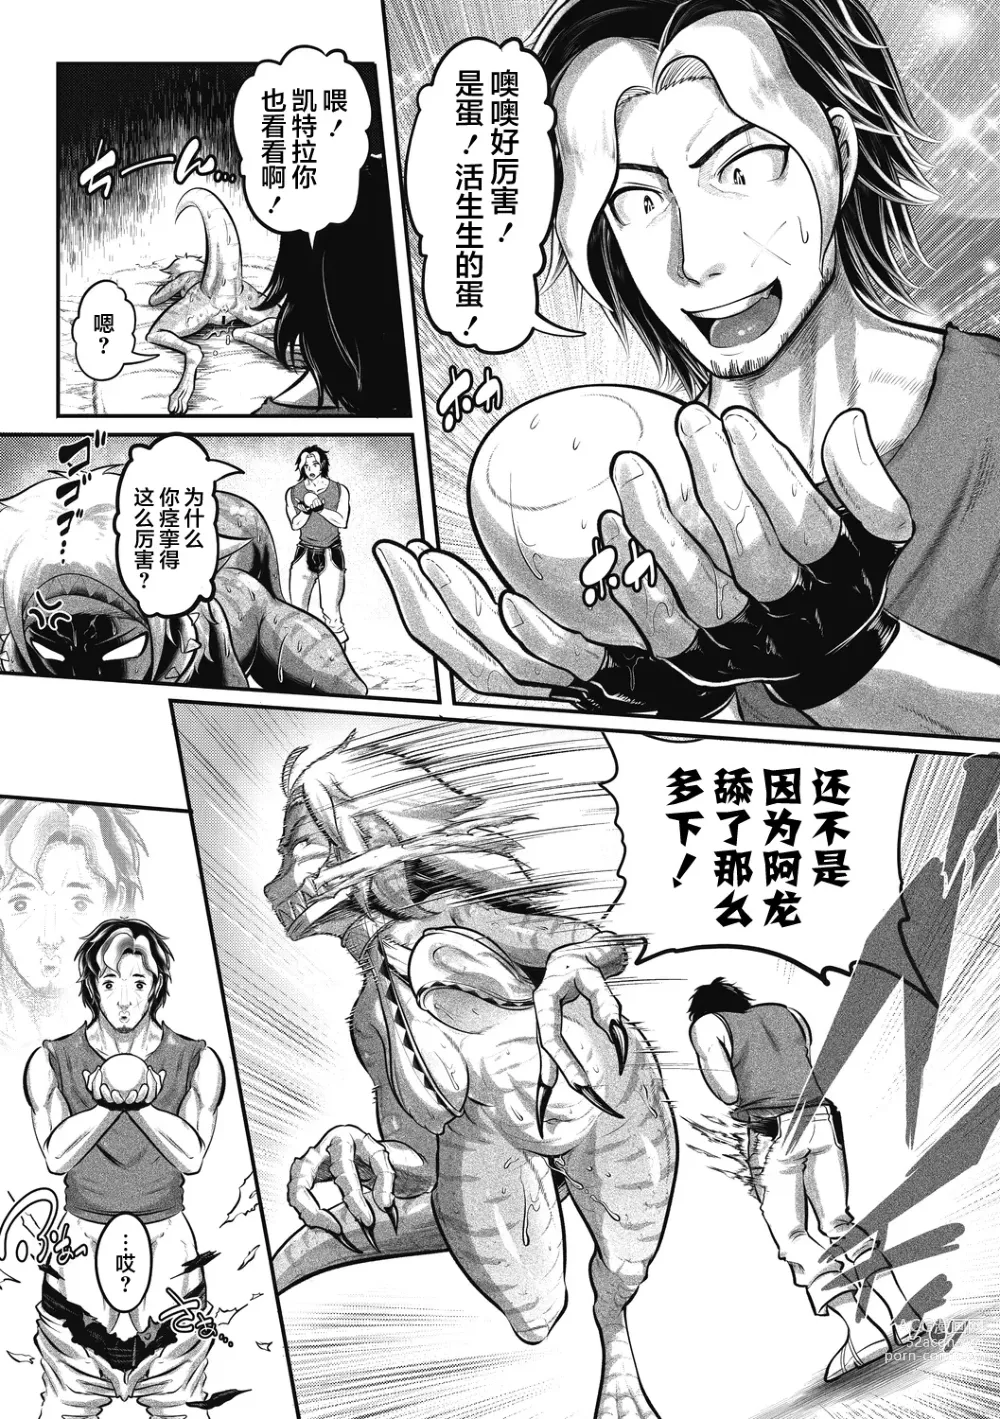 Page 16 of manga Dinosaur Journey